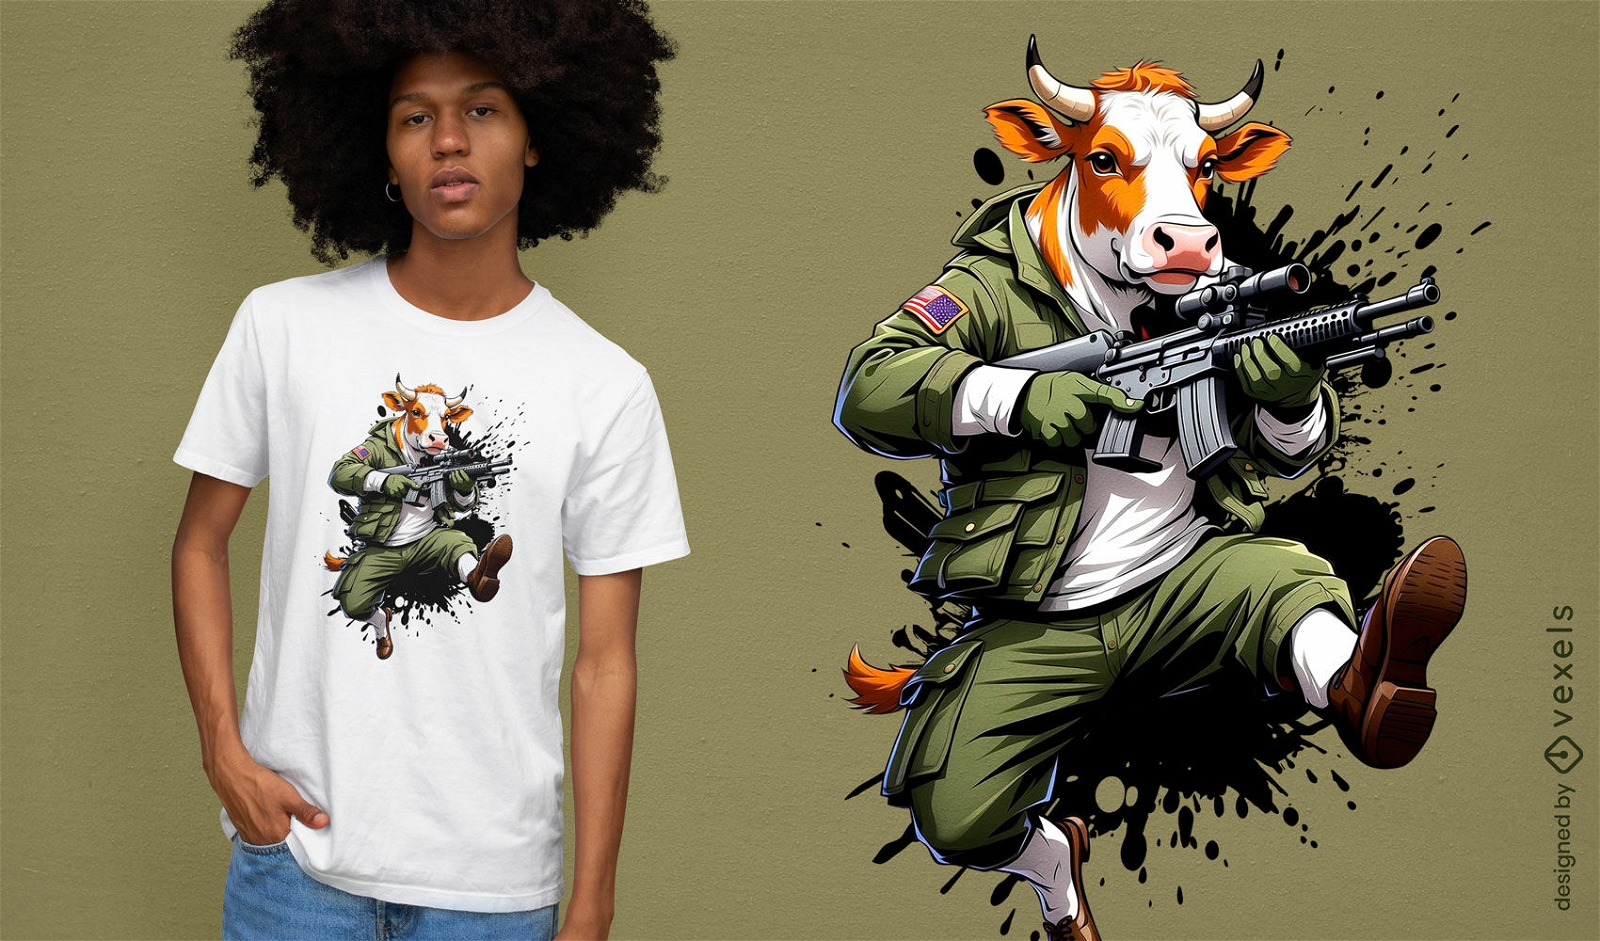 T-Shirt-Design mit bewaffneter Kuhfigur